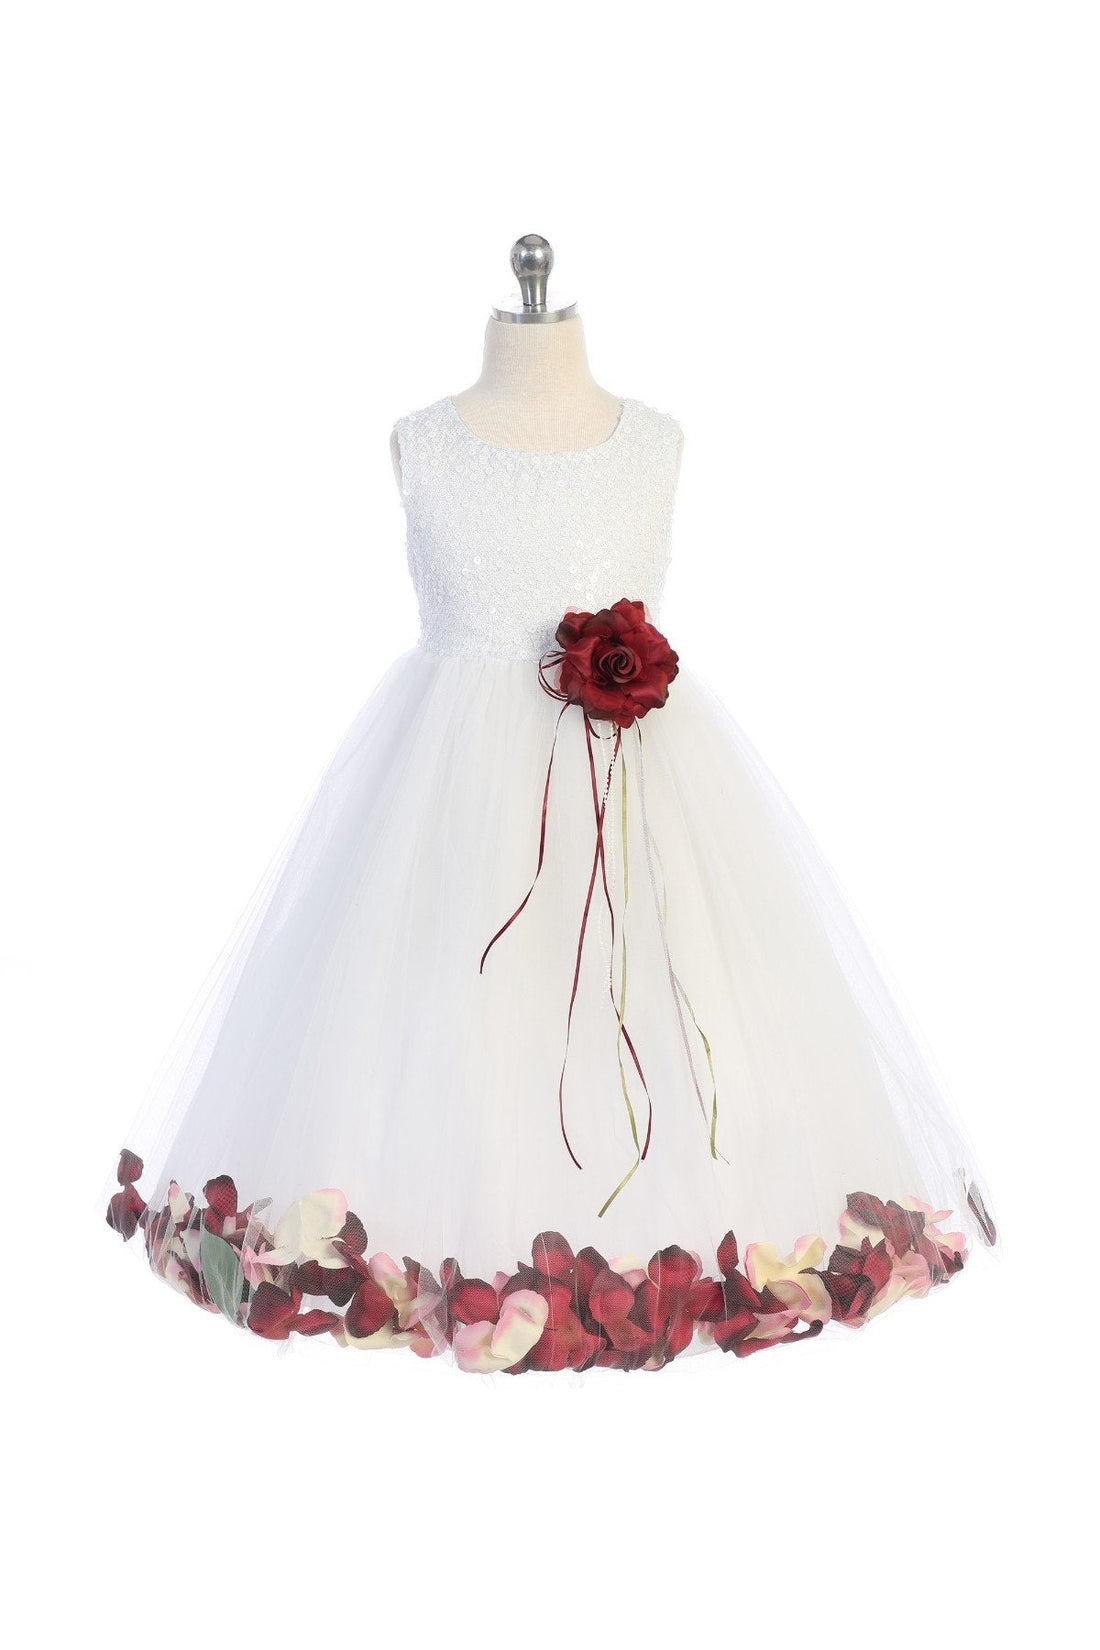 Sequin Top Petal Flower Girl Dress 1of 2 by AS160C Kids Dream - Girl Formal Dresses